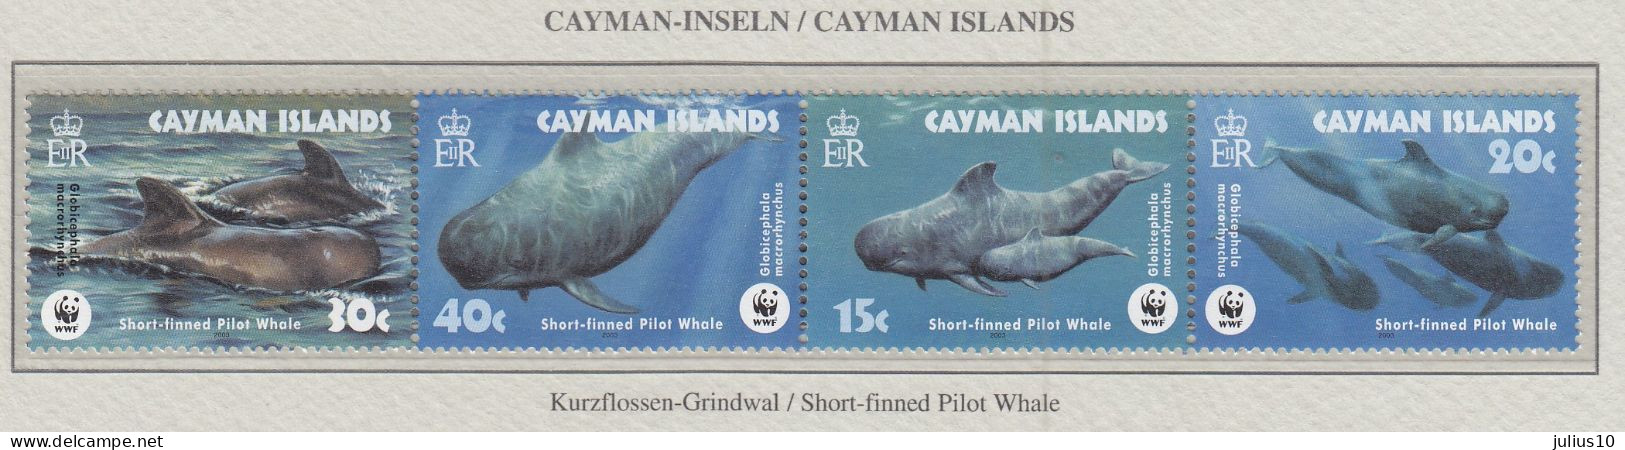 CAYMAN ISLANDS 2003 WWF Whales Mi 970-973 MNH Fauna 669 - Walvissen